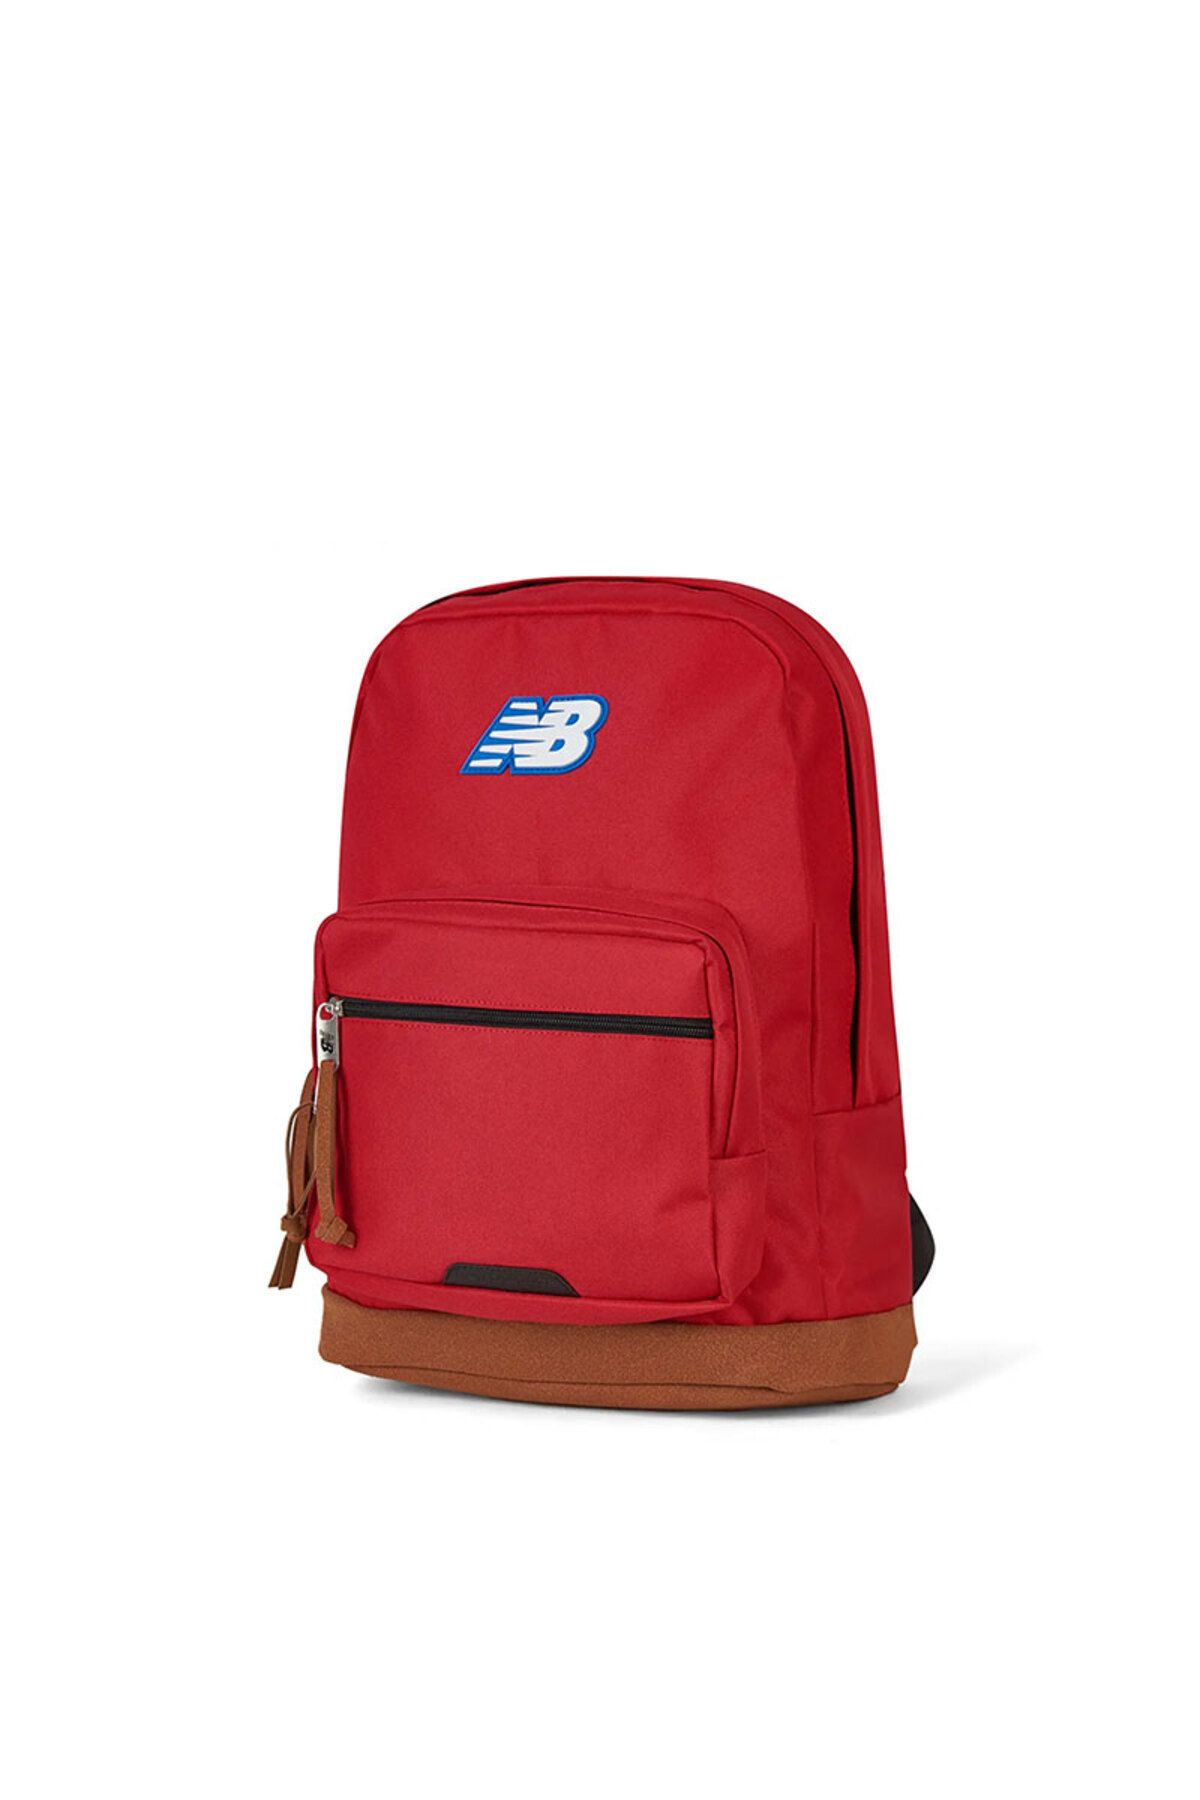 New Balance Backpack